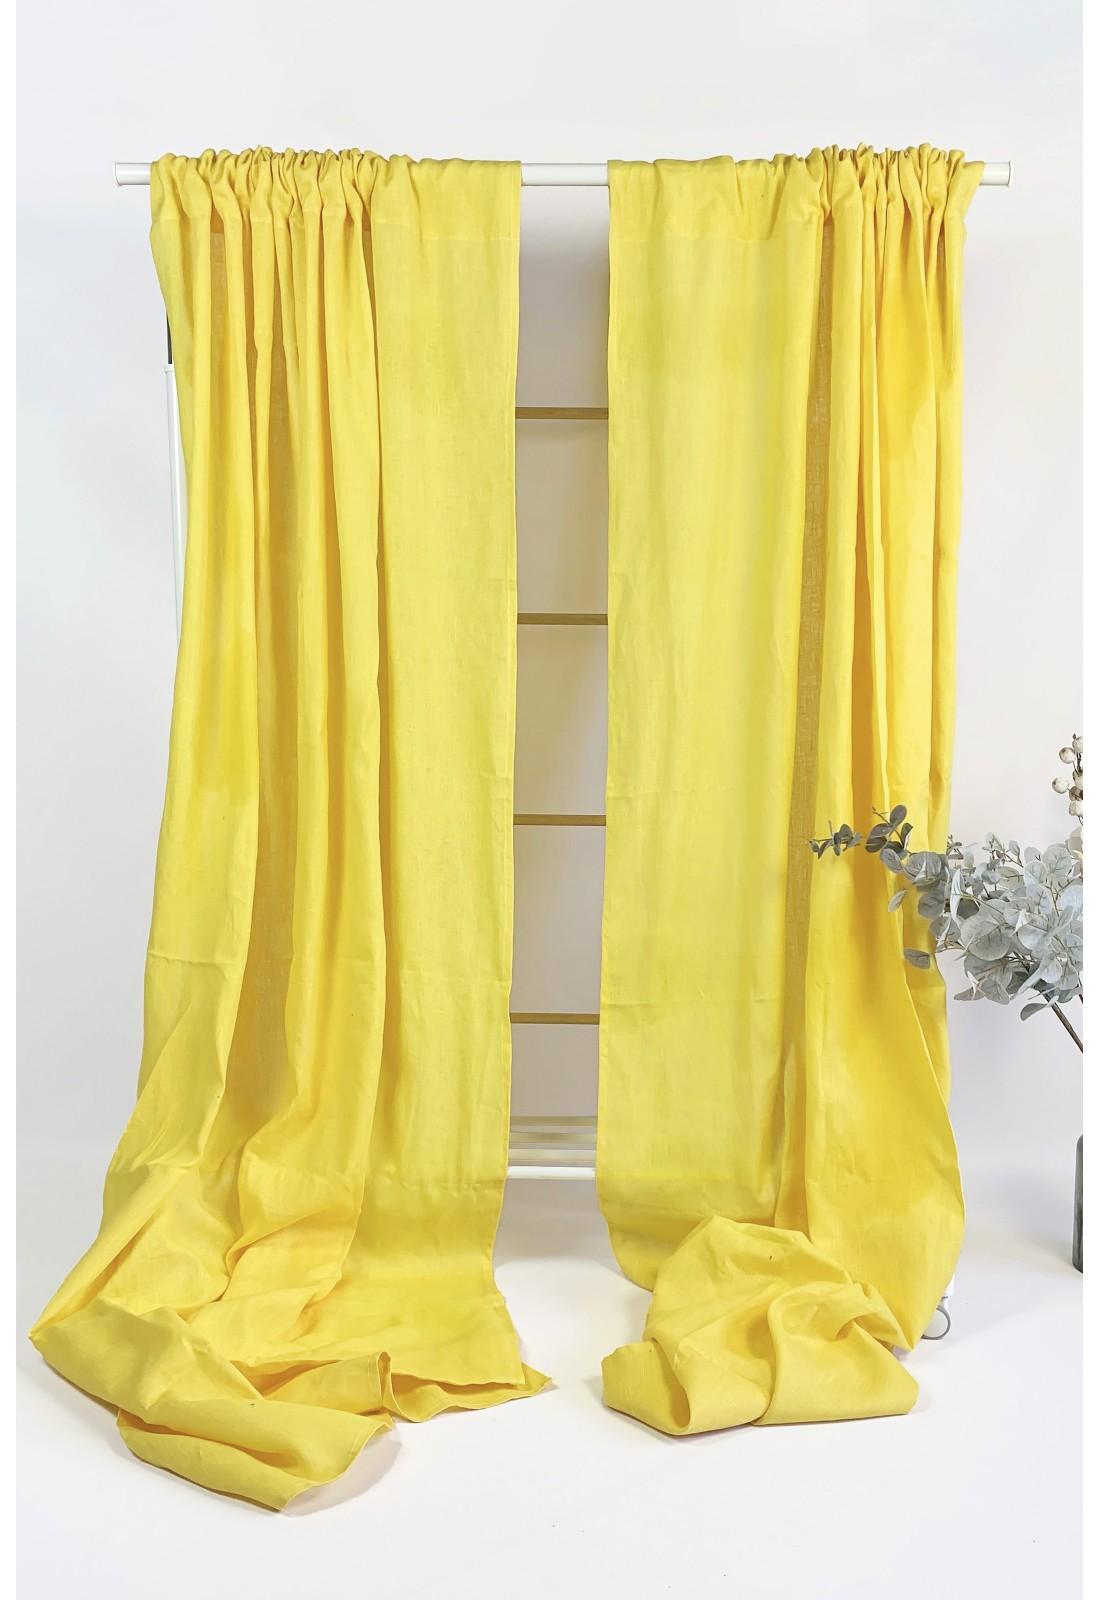 Linen curtain panels Long Wide Rod pocket Tab top Ties Hidden tabs